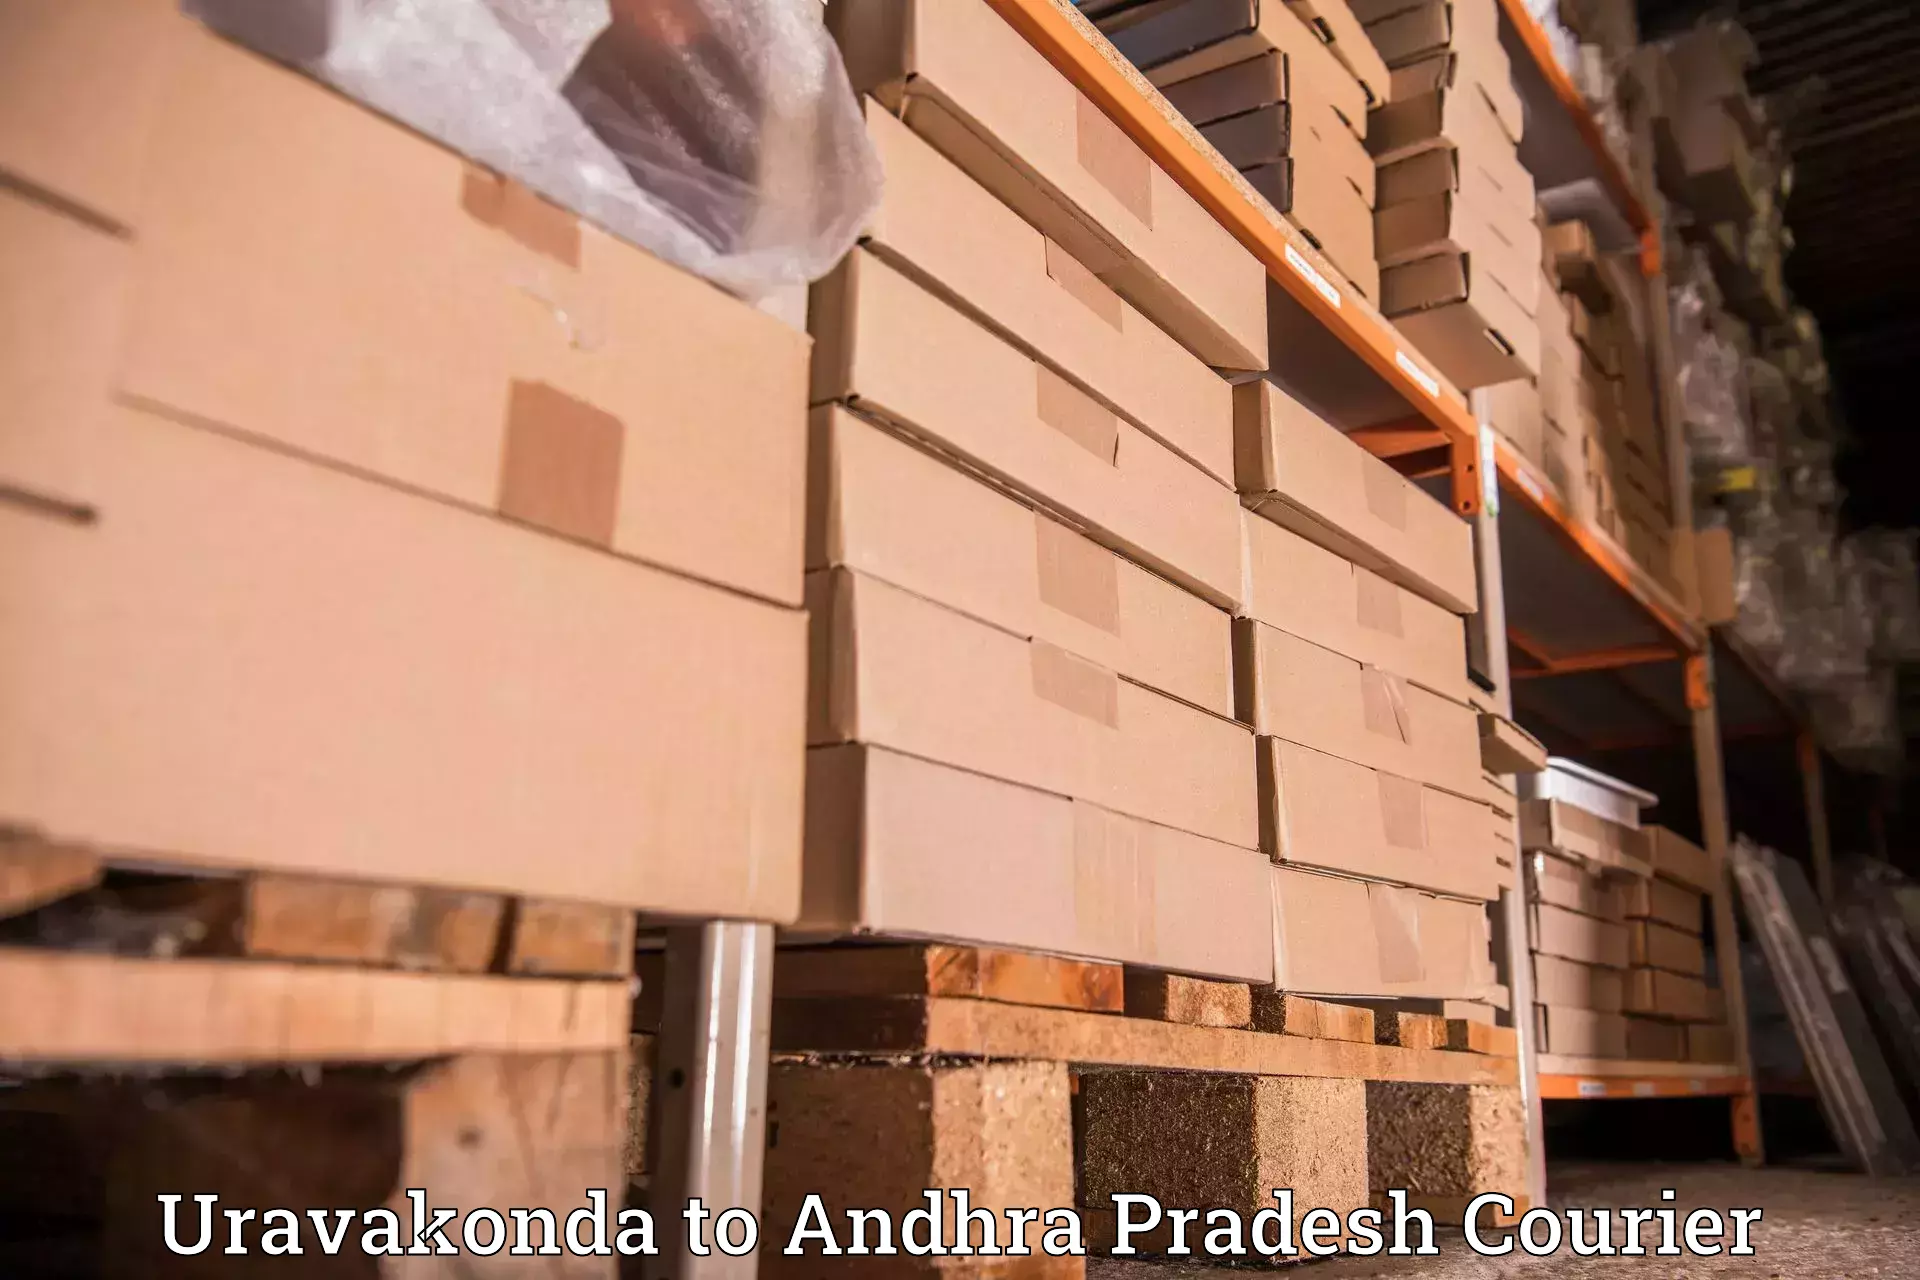 Courier service partnerships in Uravakonda to Narsapur